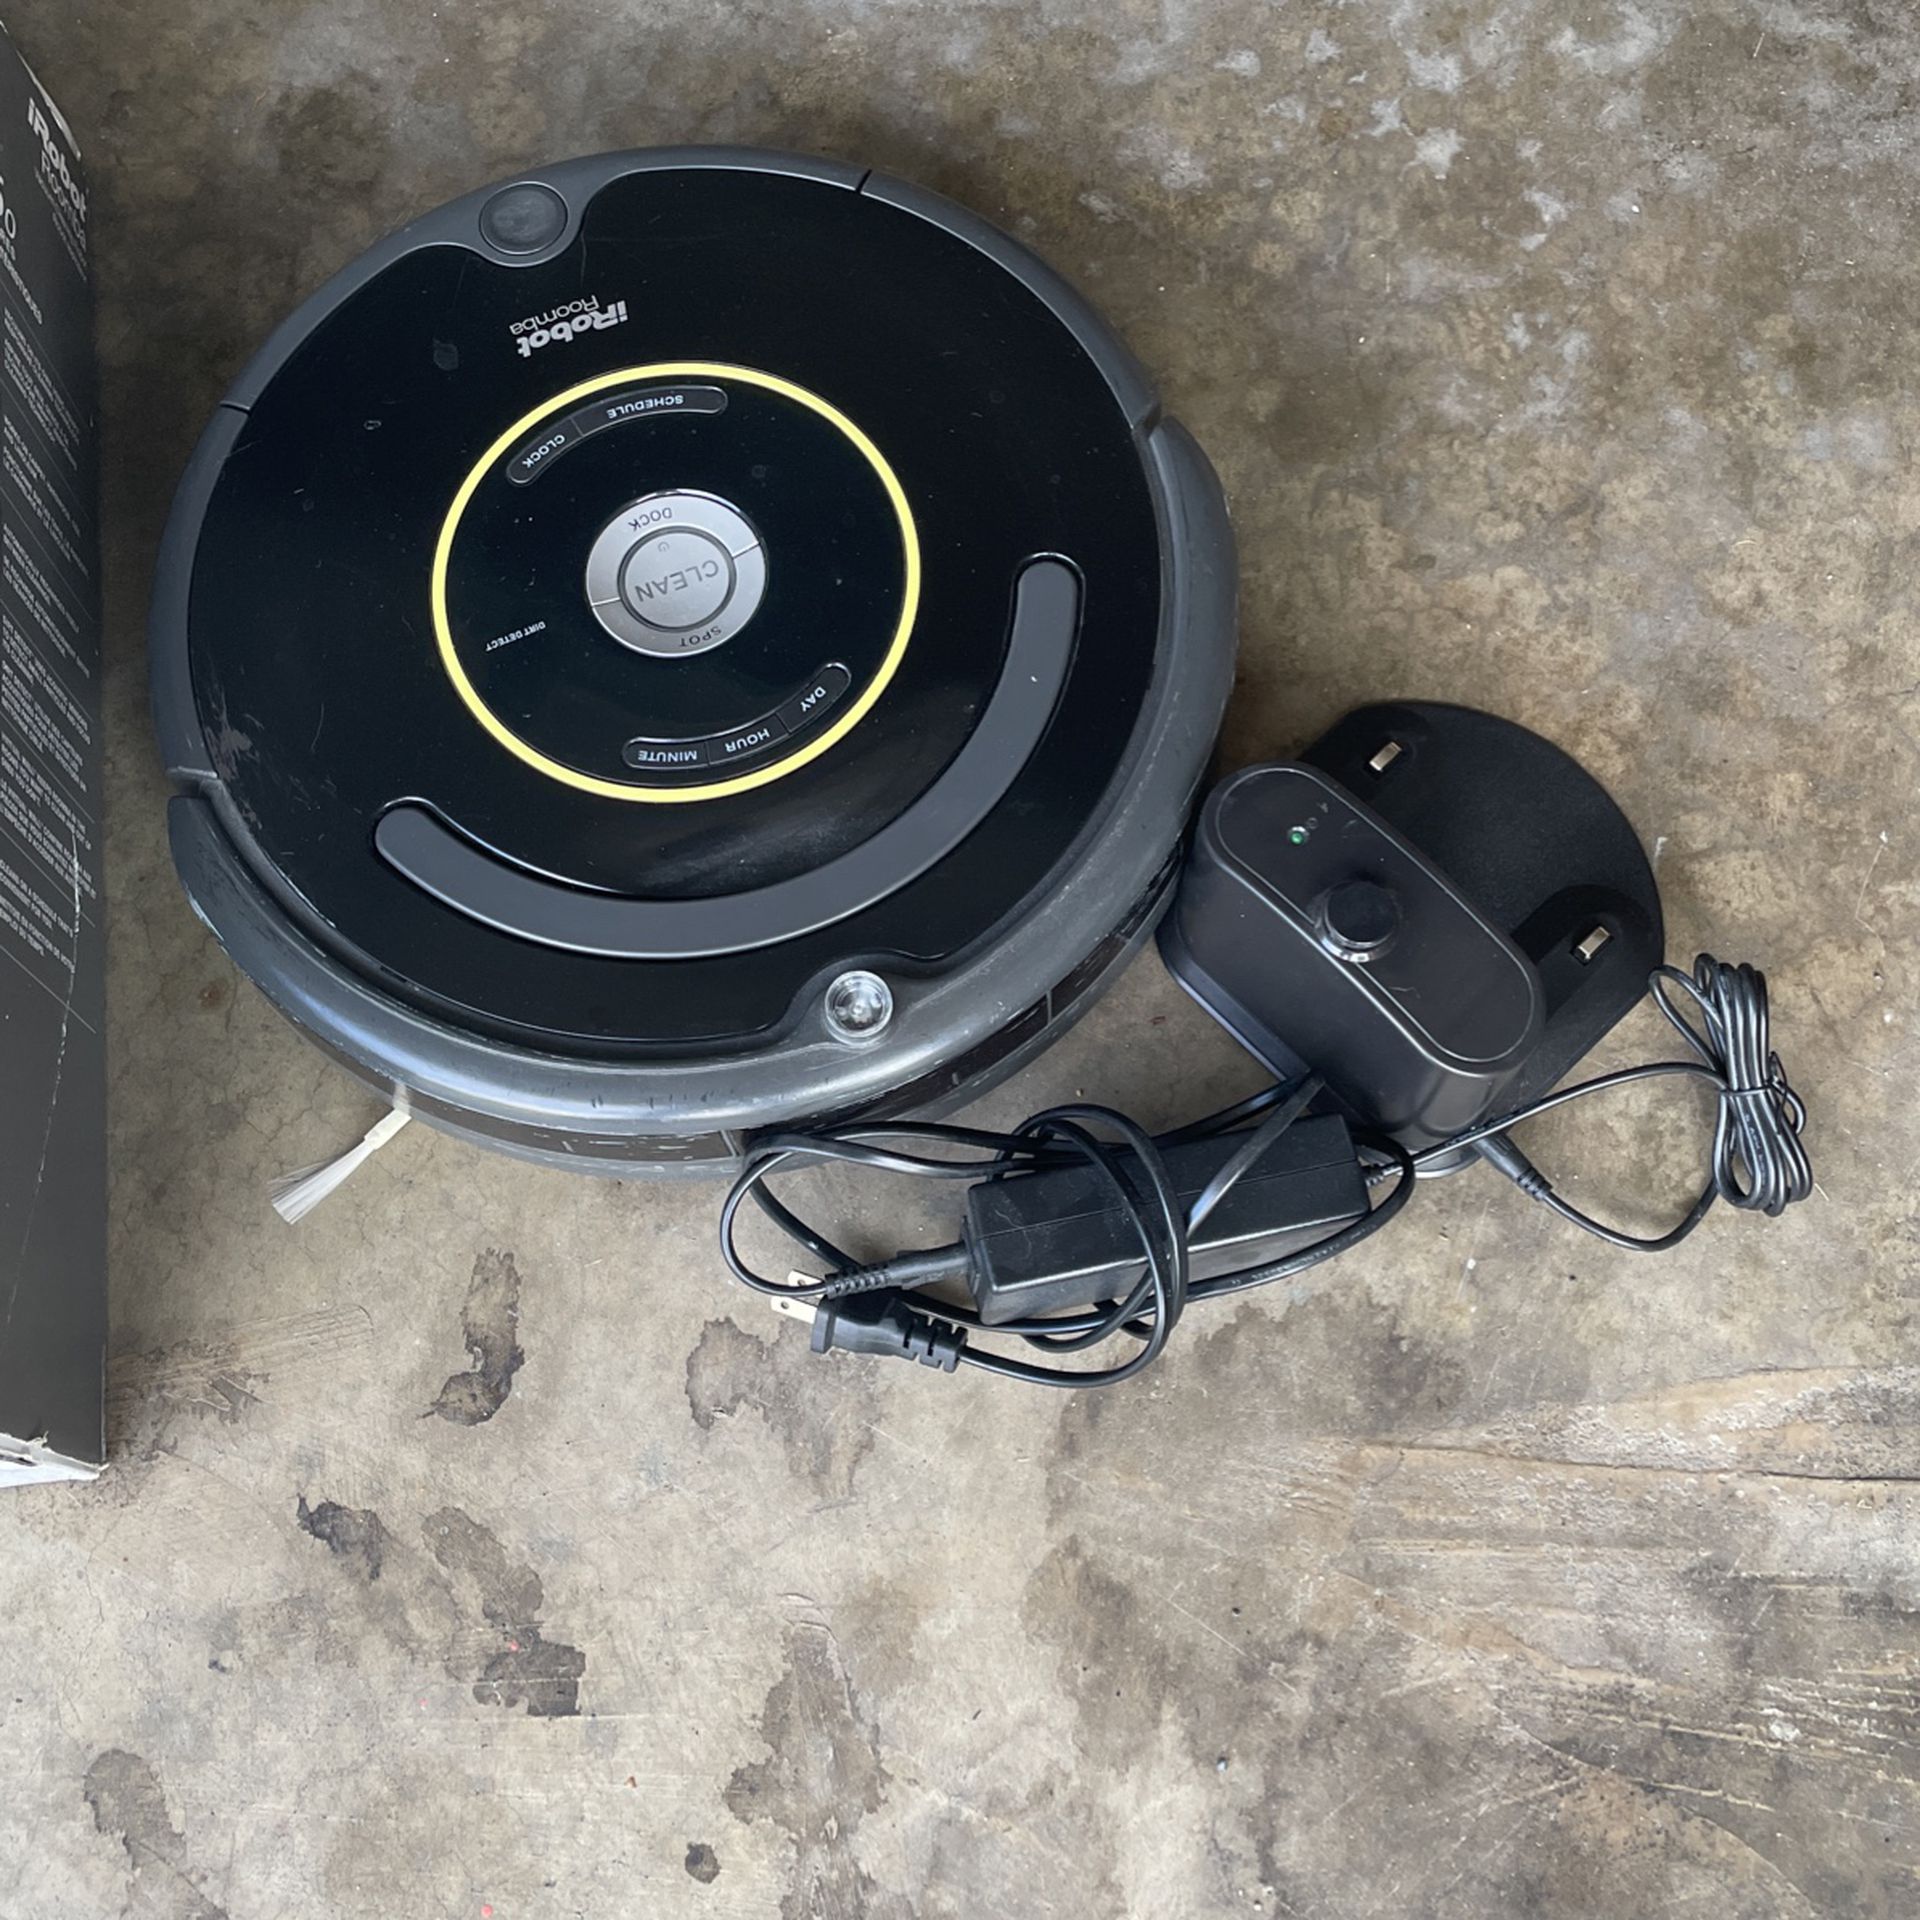 iRobot Roomba 650 - New Battery - Works Great